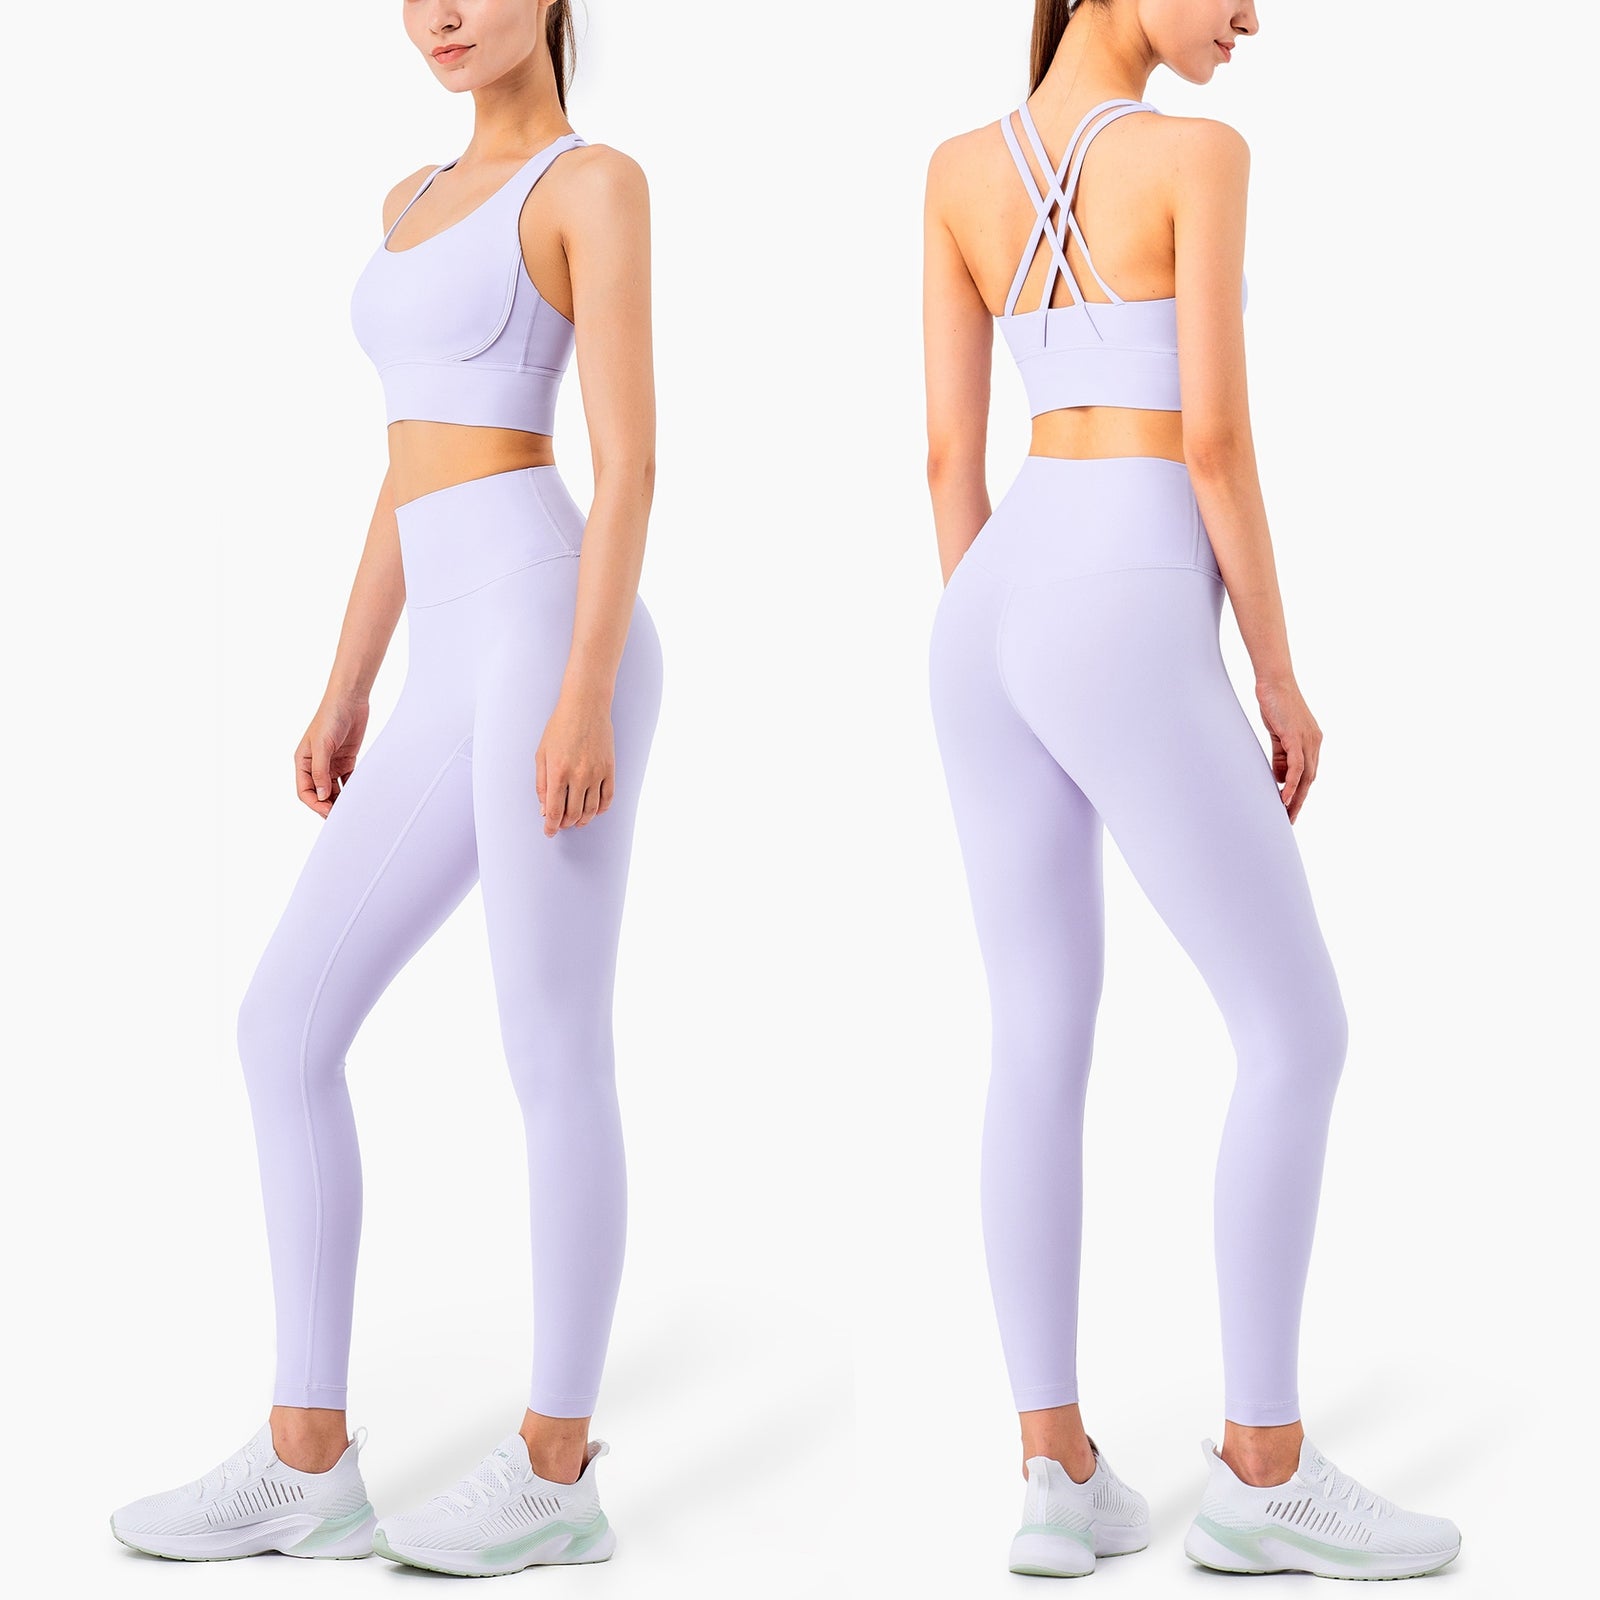 Vnazvnasi Yoga Set 2 Piece Workout Clothes for Women Cross Back Crop Top Sports Bra Fitness Top Gym Leggings Yoga Sportswear